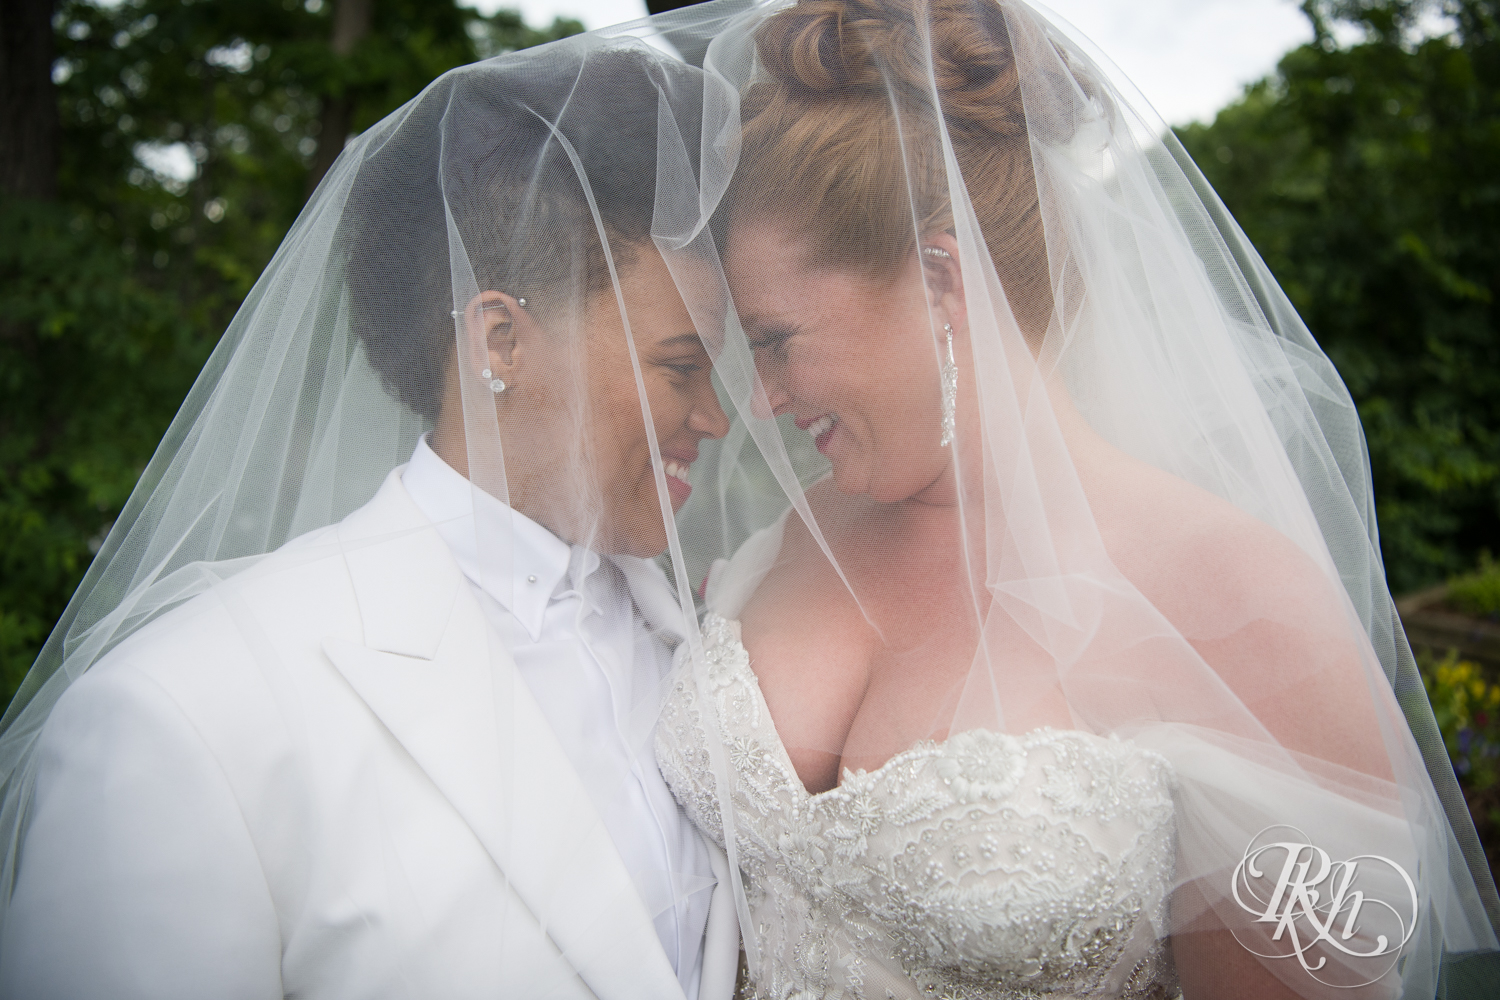 Black lesbian bride and white bride smile under veil at Leopold's Mississippi Gardens in Brooklyn Park, Minnesota.